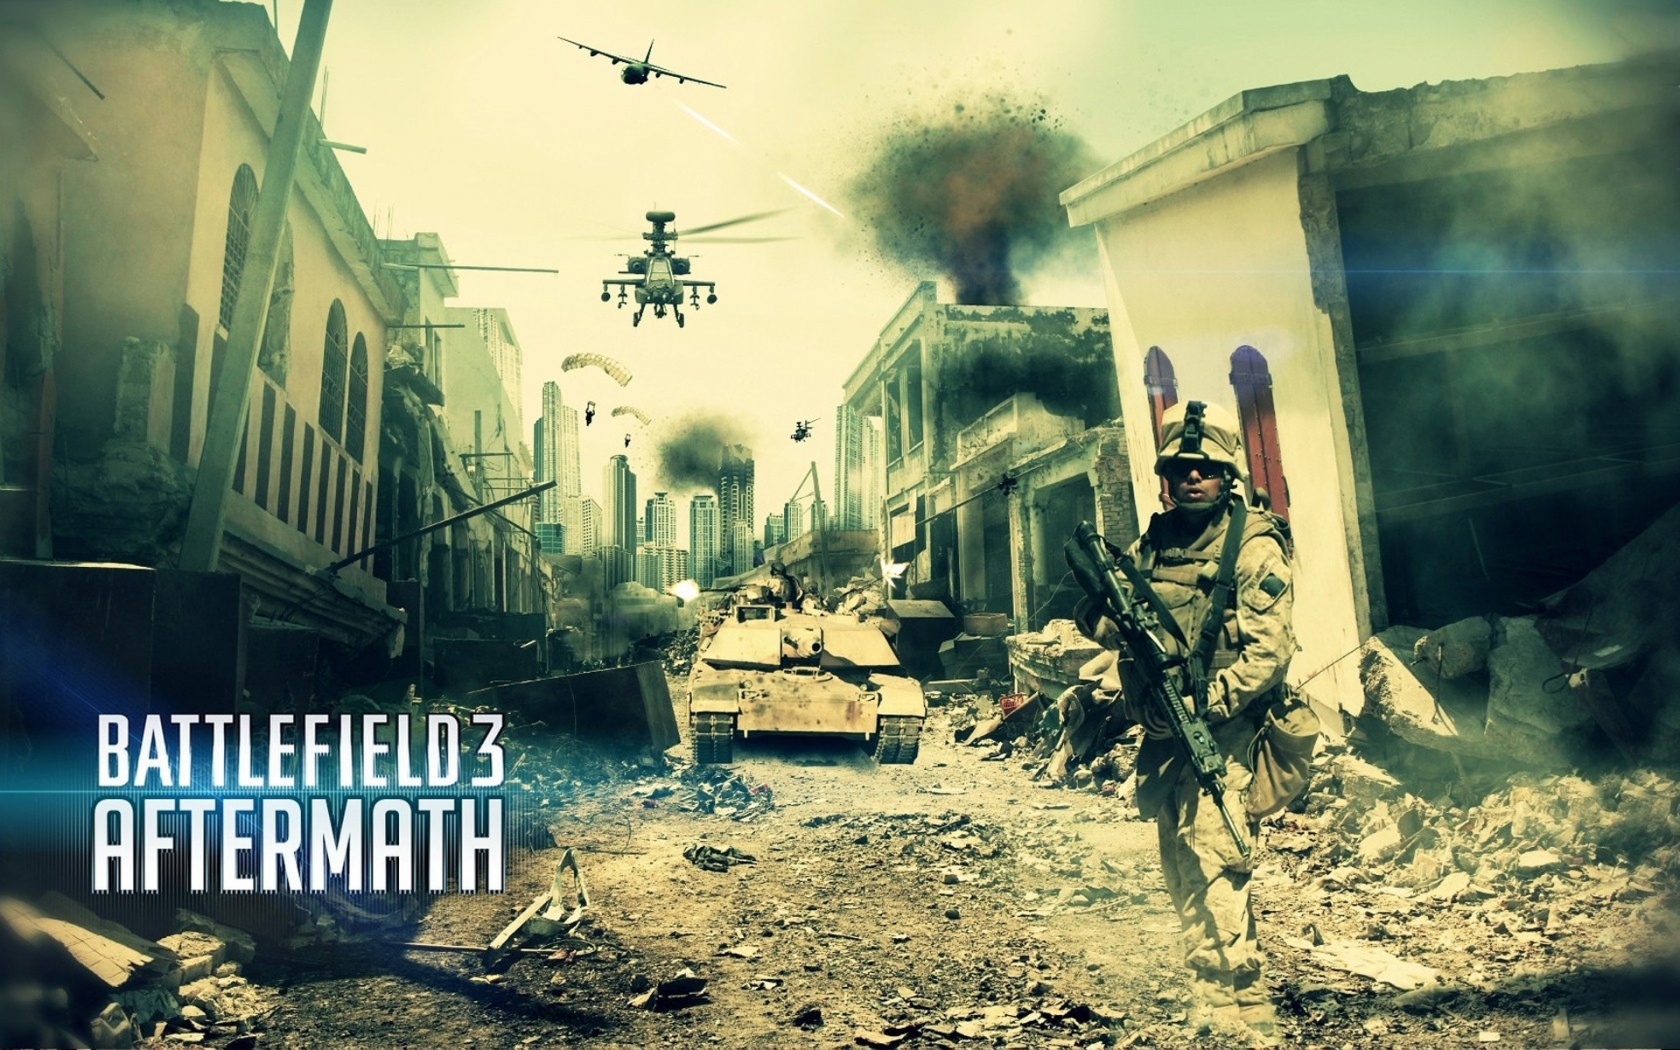 Battlefield 3 Aftermath for 1680 x 1050 widescreen resolution